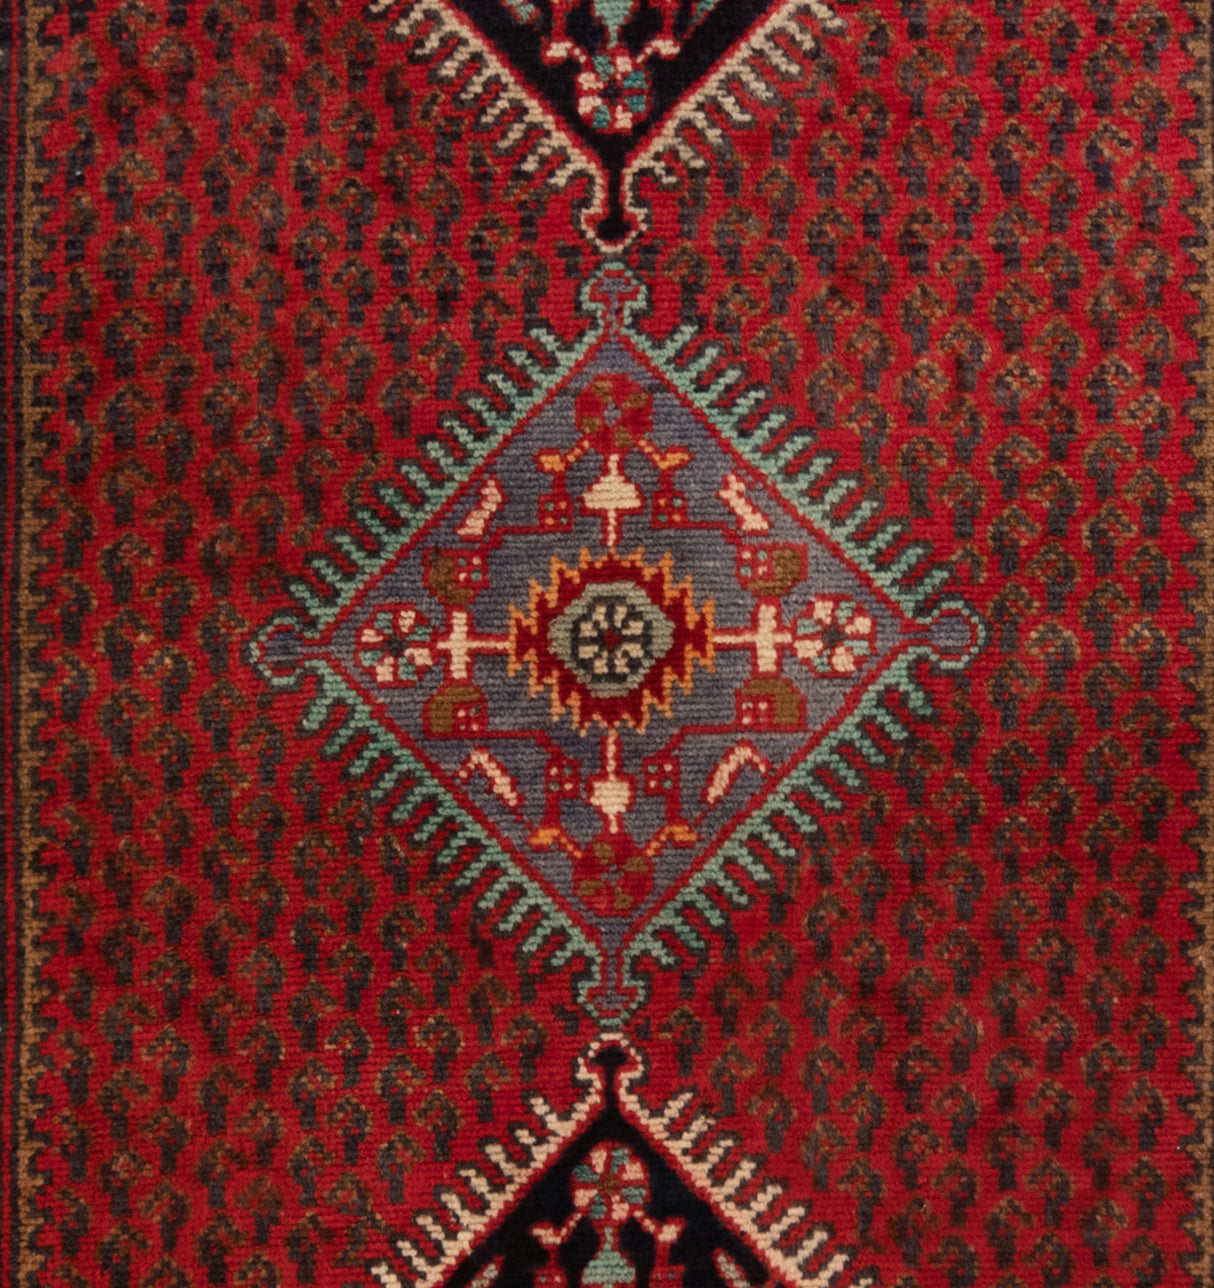 Tapete persa sarough | 100x63cm